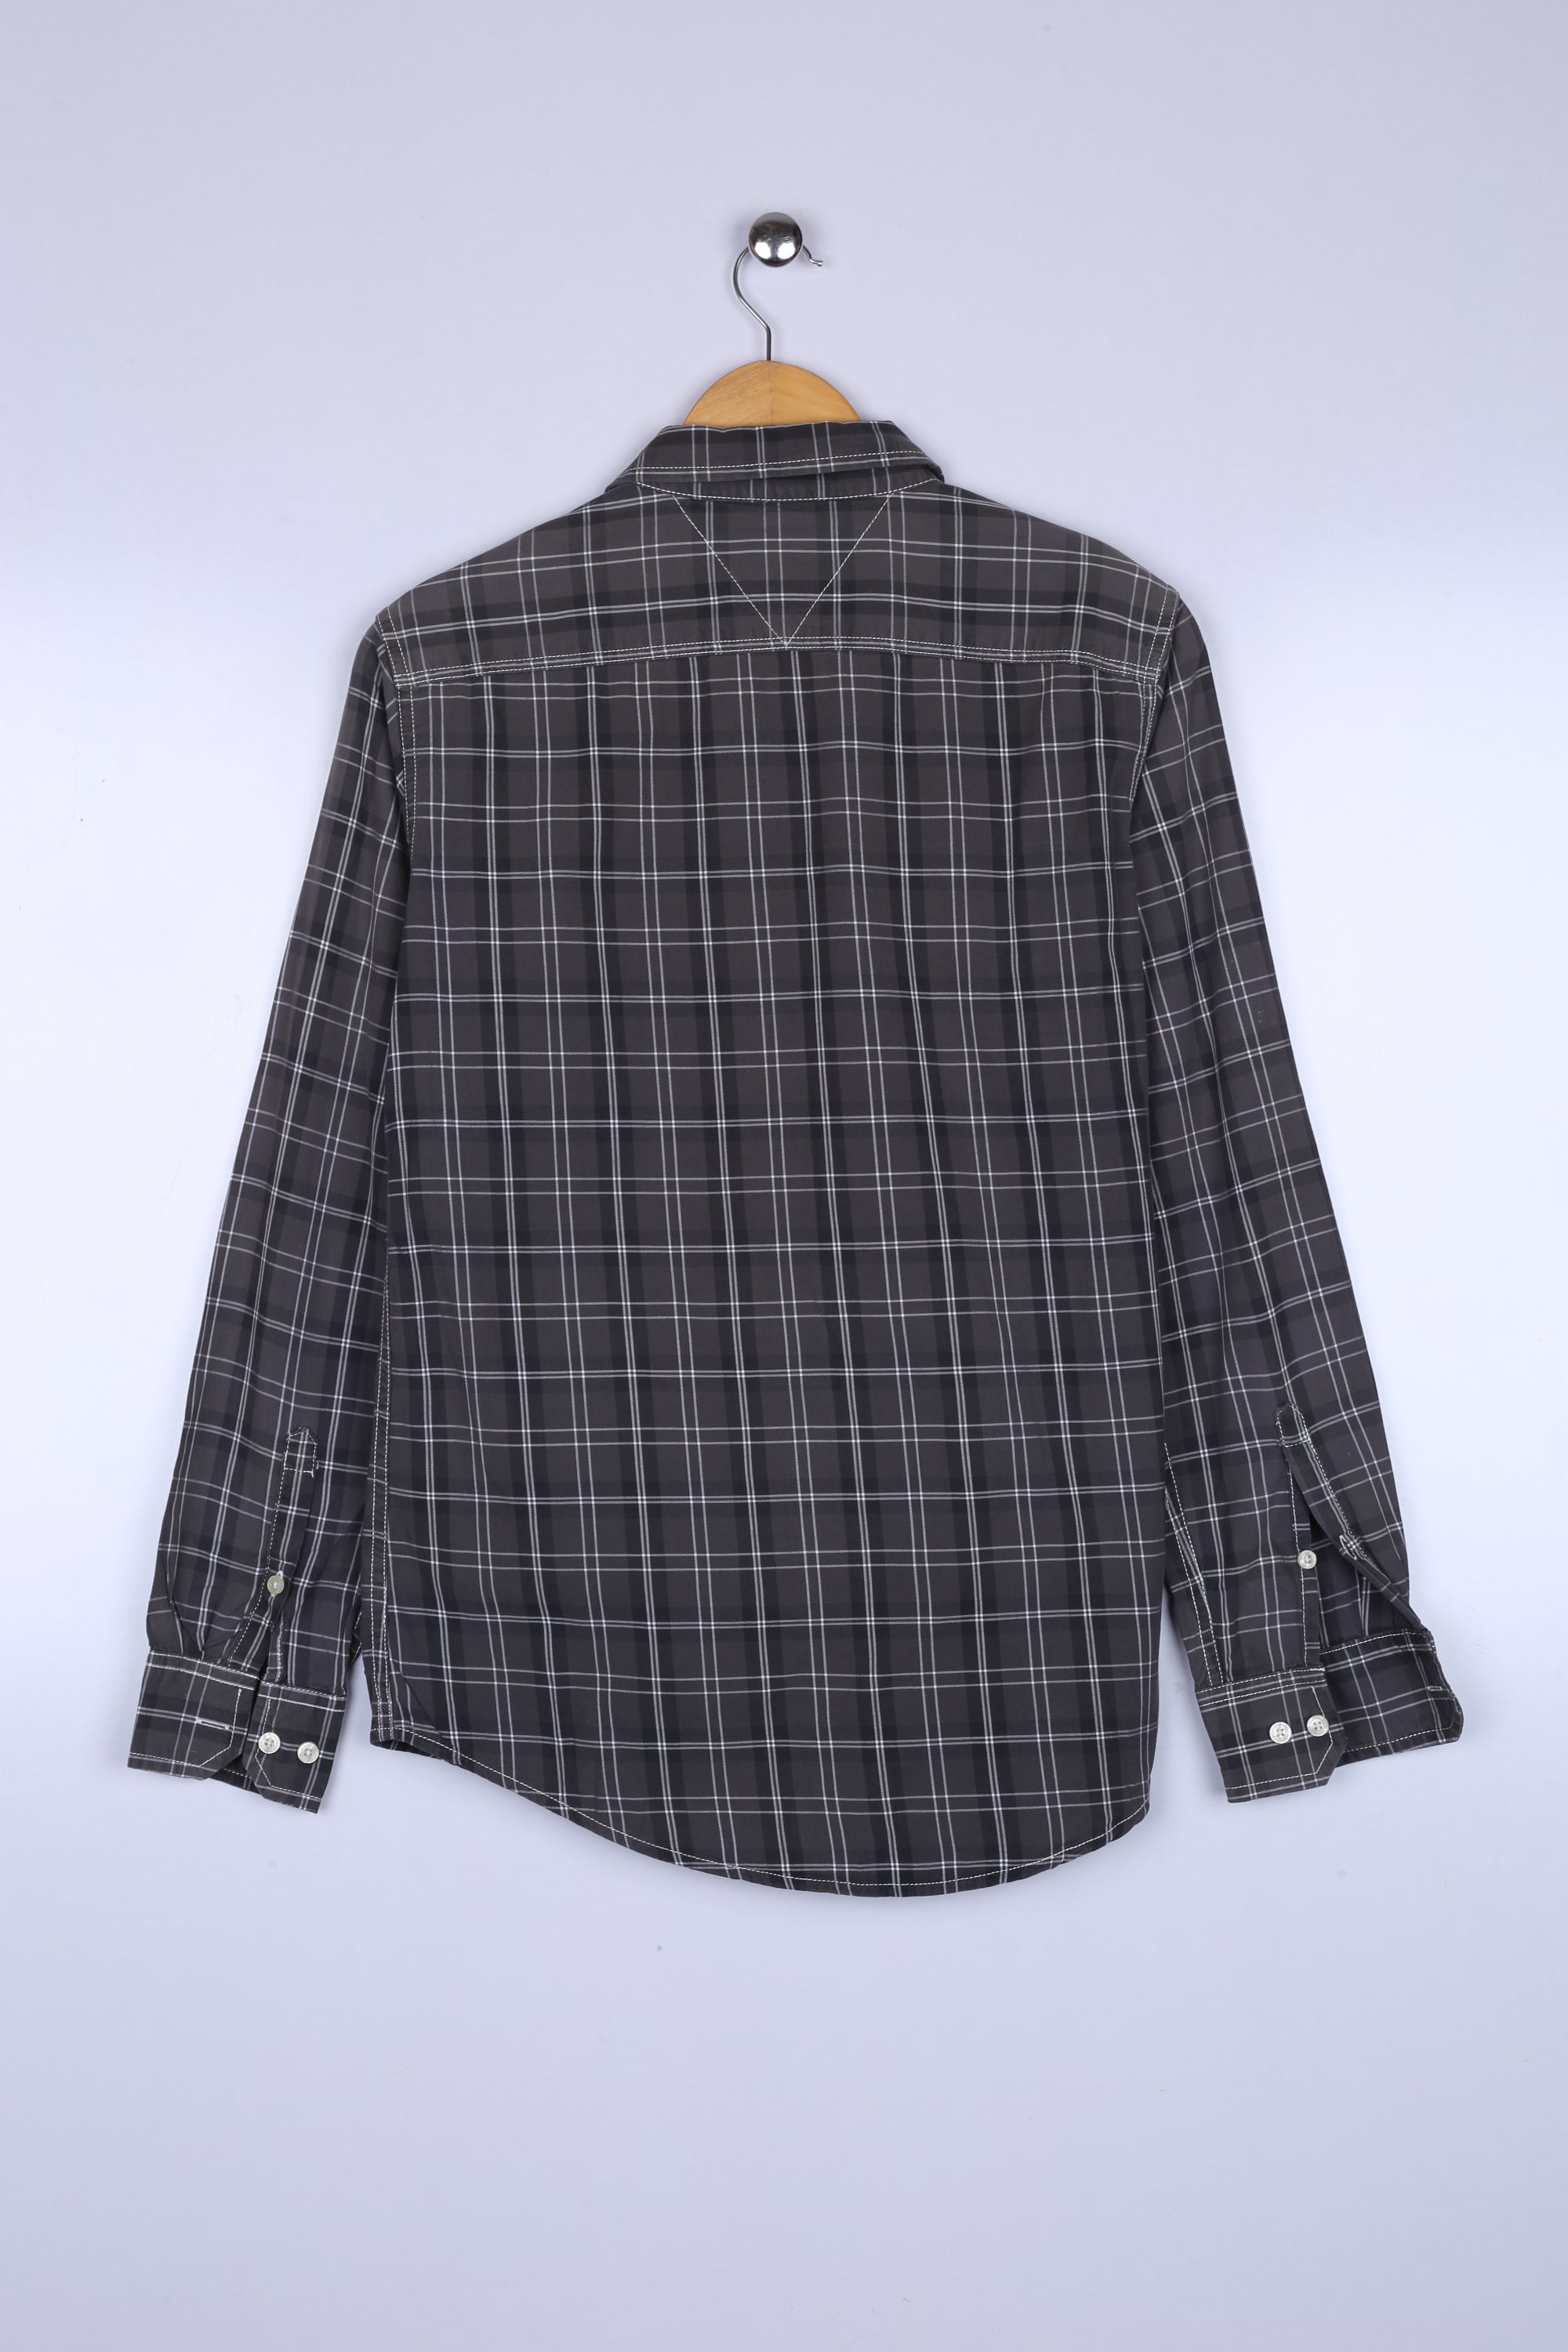 Vintage Tommy Hilfiger Shirt Black Checkered